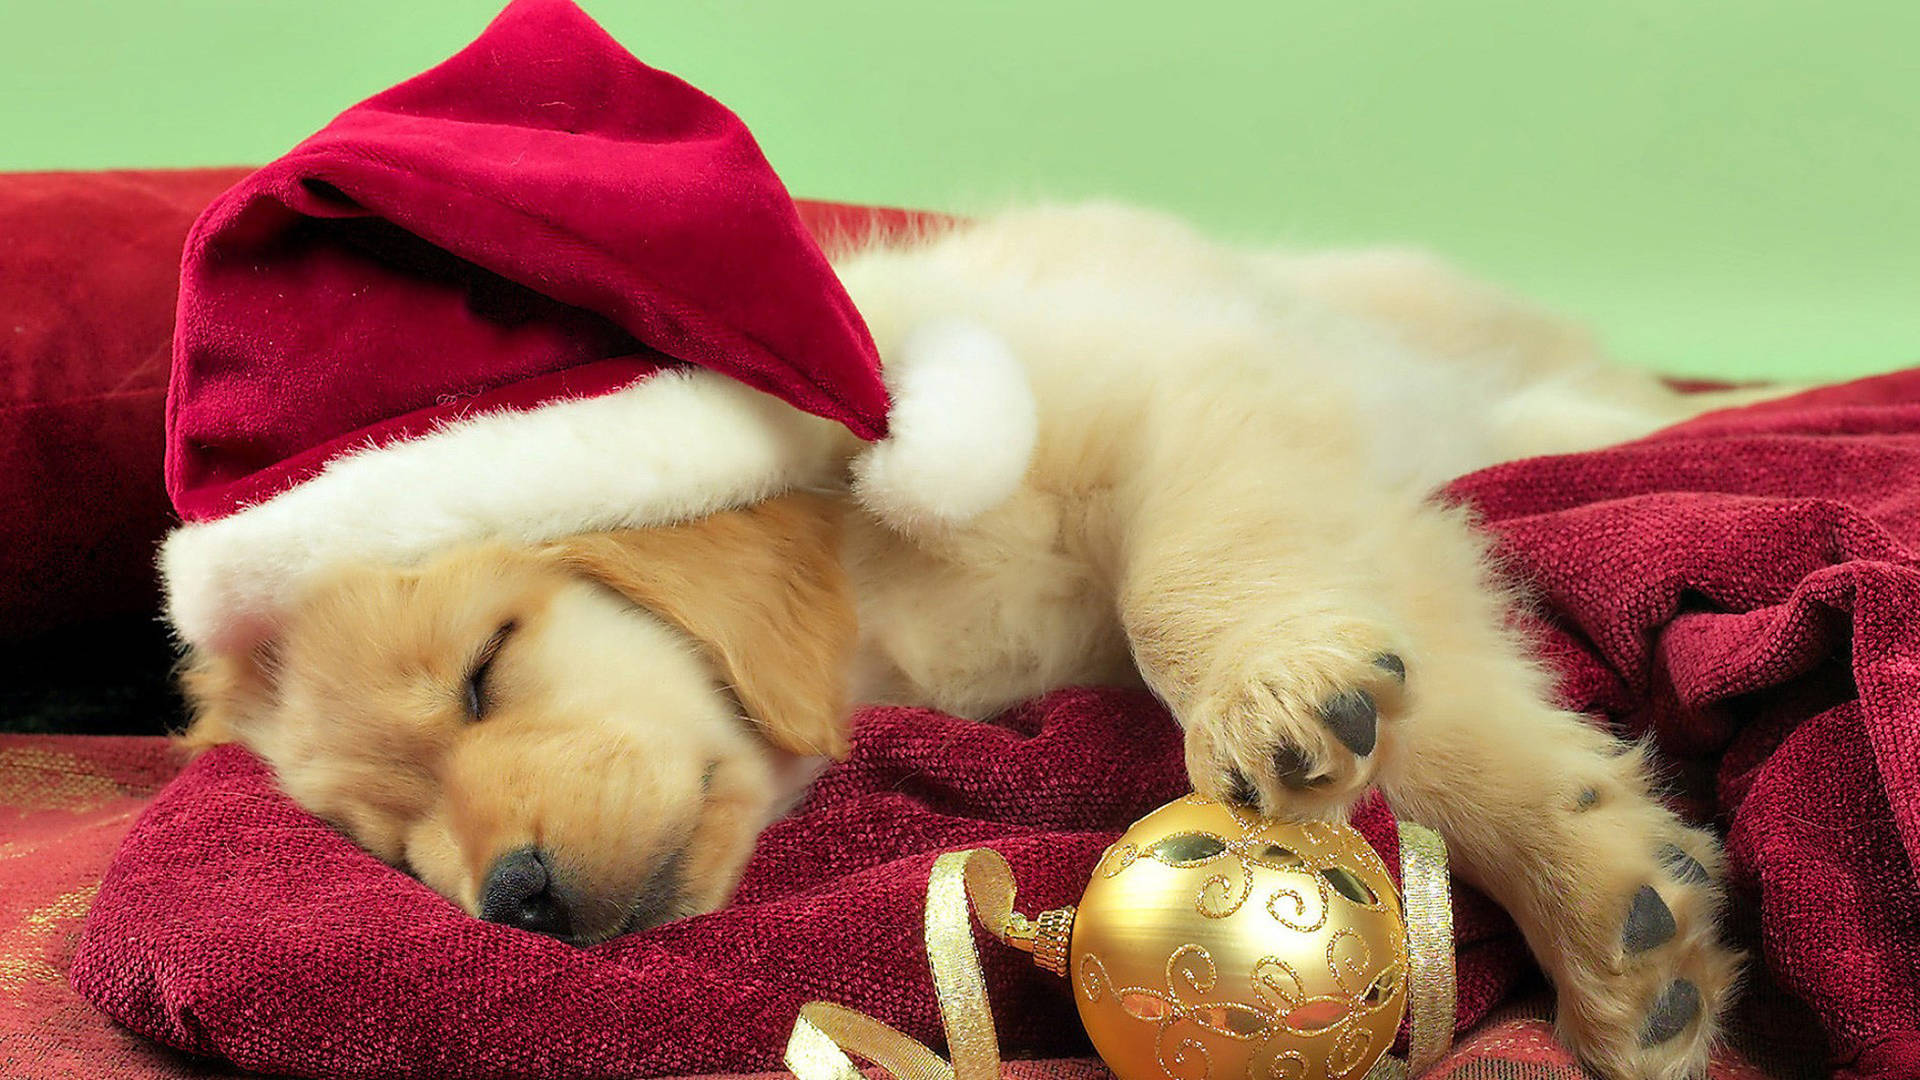 Golden Retriever Puppy Christmas